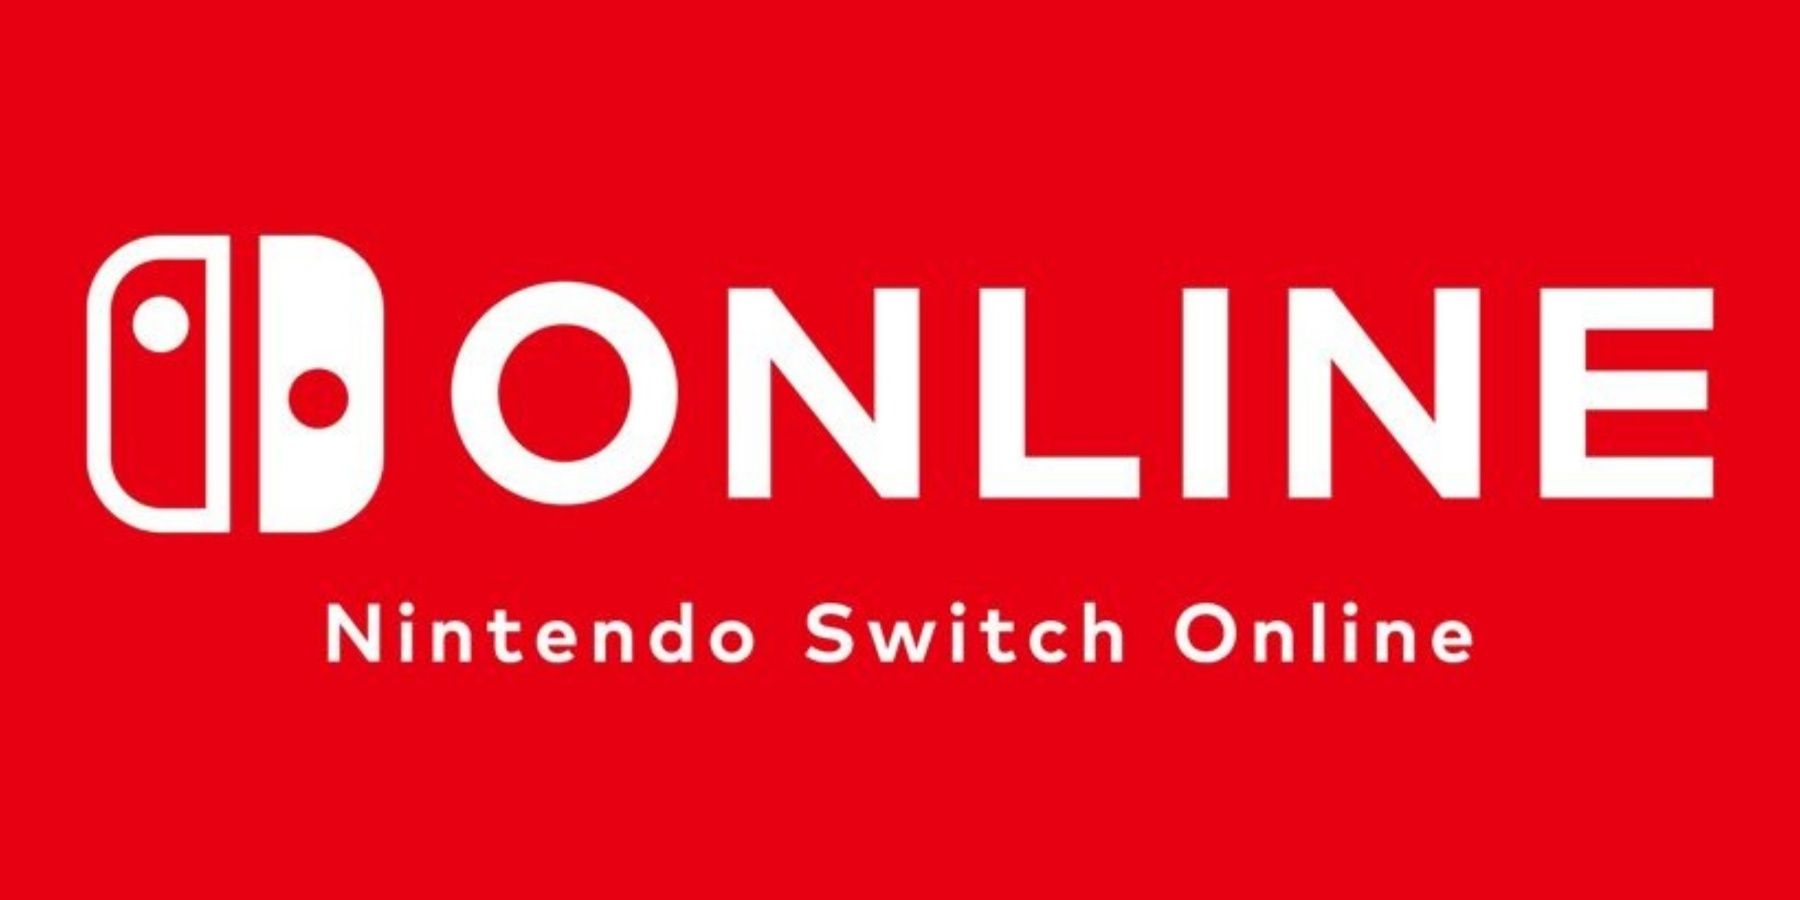 nintendo switch online promotional image